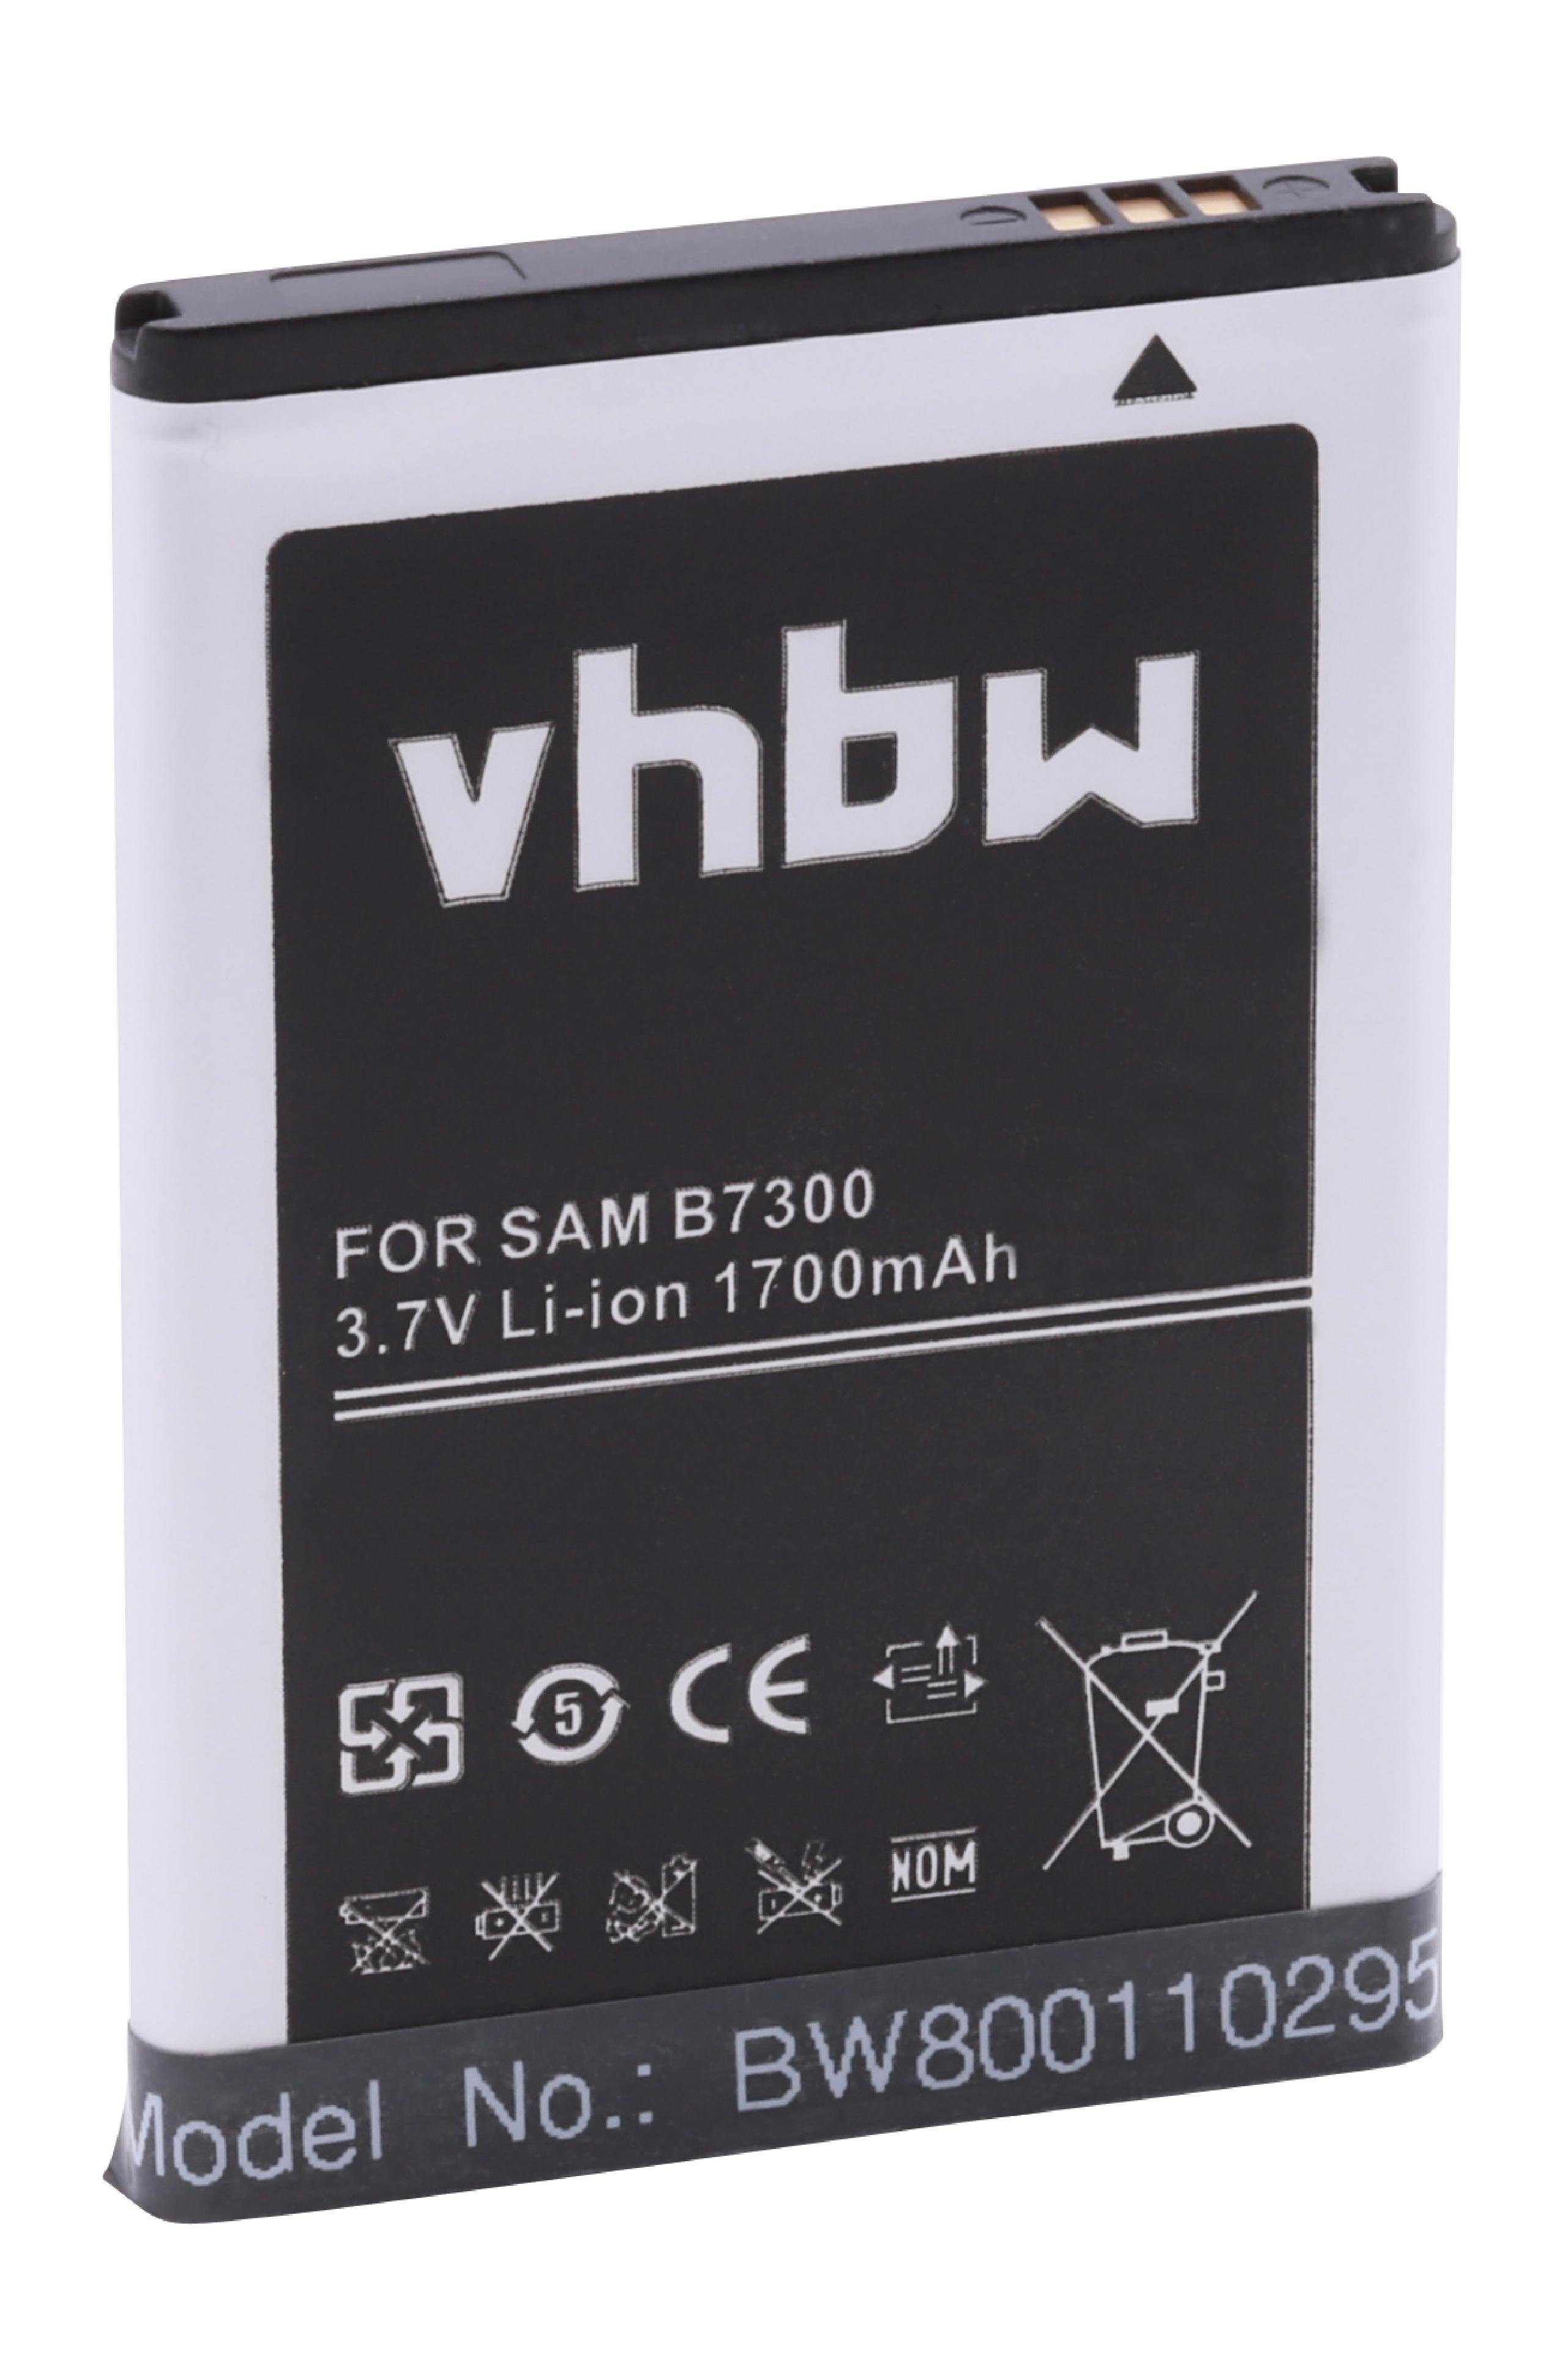 mit vhbw mAh 940SC V) kompatibel (3,7 Softbank Smartphone-Akku Li-Ion 1700